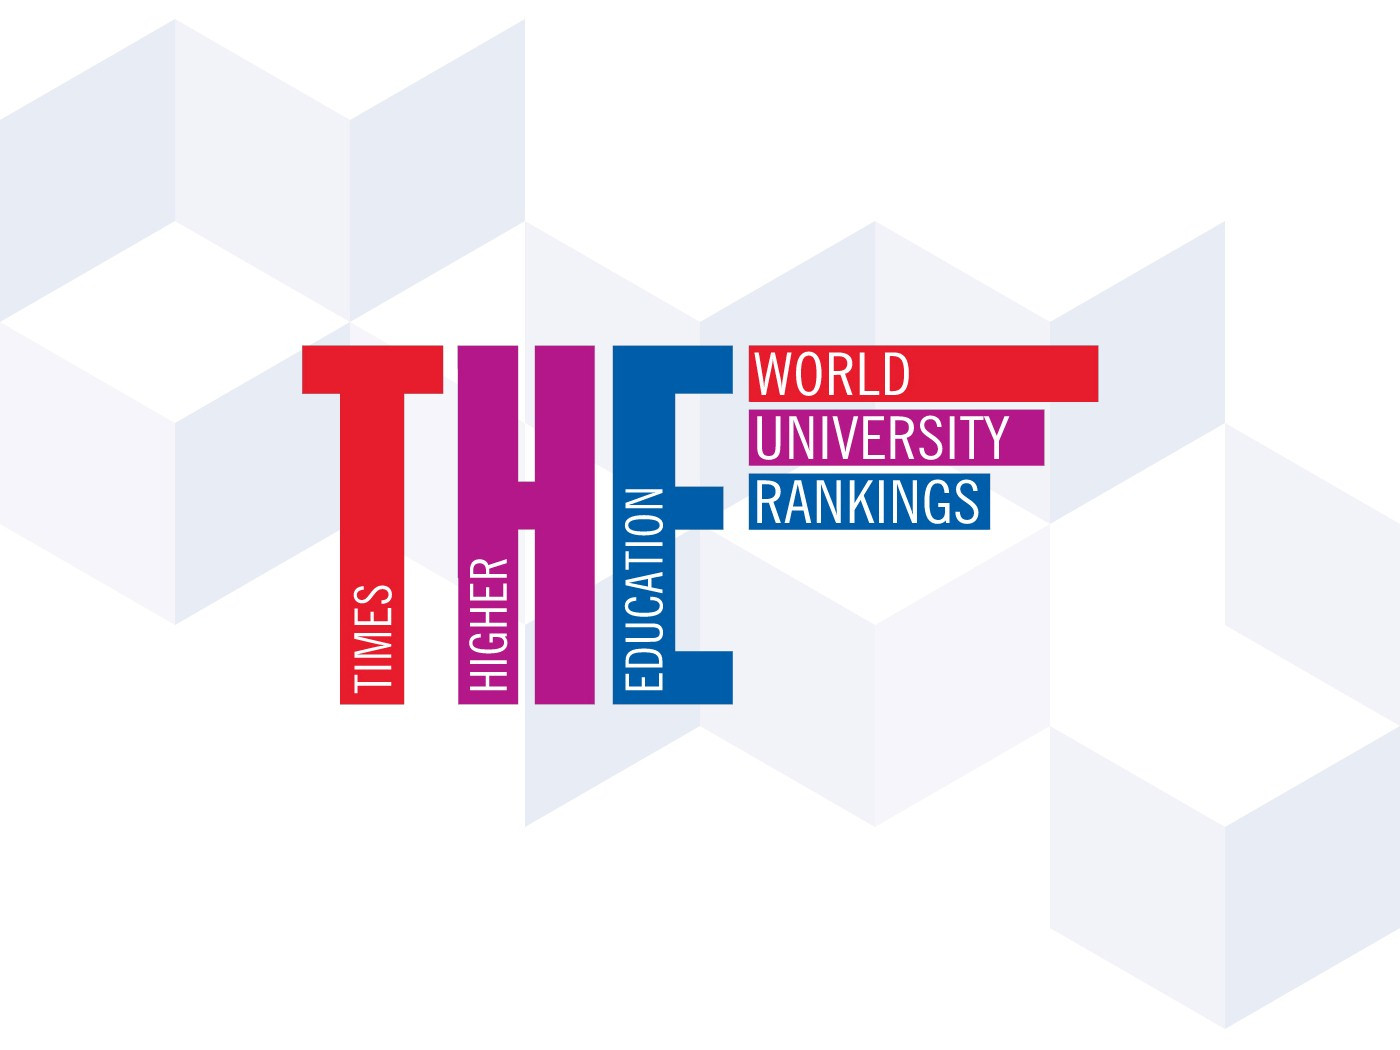 World rank universities. The World University rankings университет. The World University rankings логотип. Times higher Education. Times higher Education World University rankings.